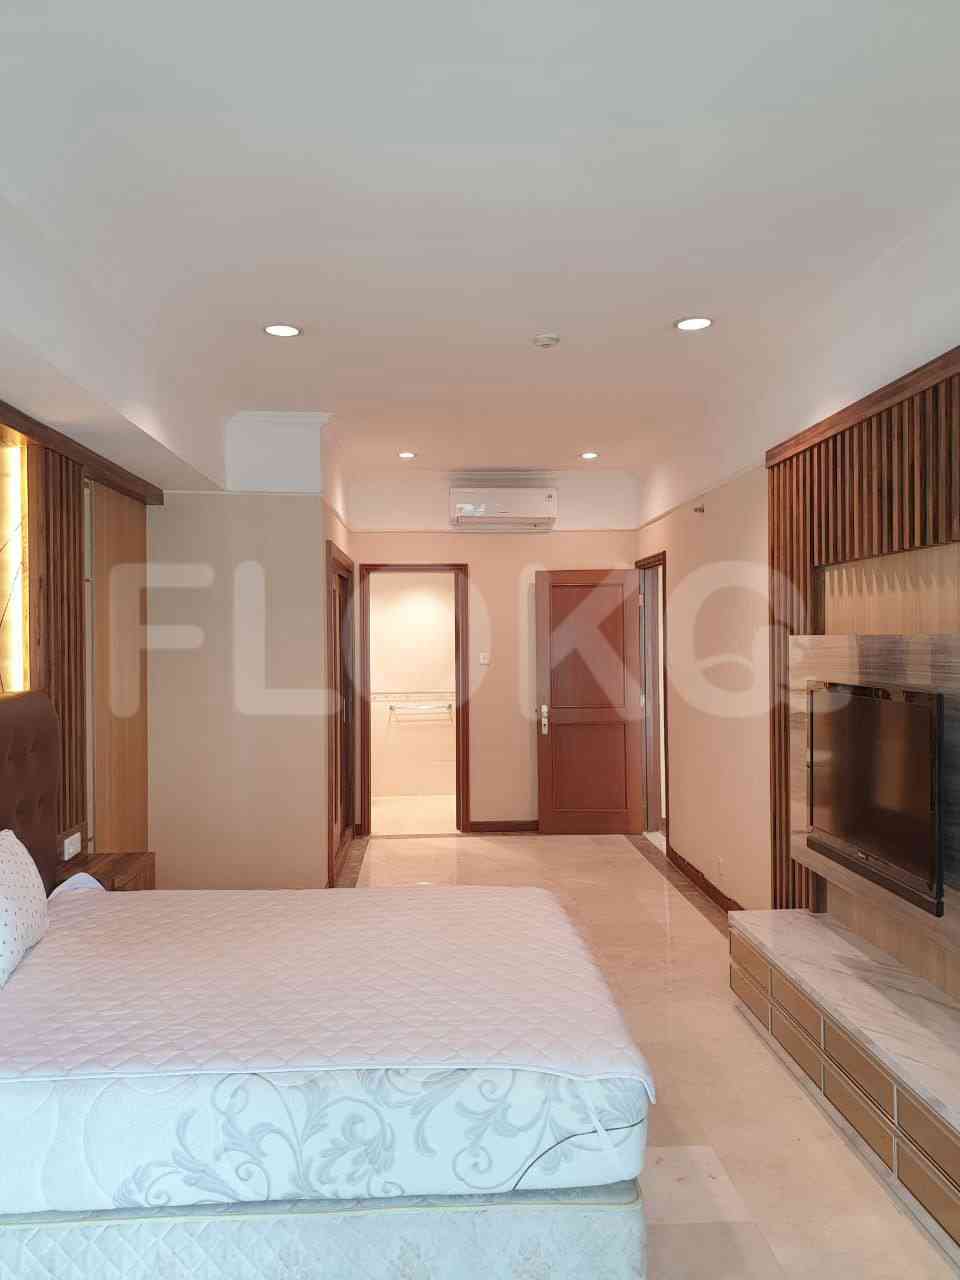 3 Bedroom on 15th Floor for Rent in Casablanca Apartment - ftebc2 2